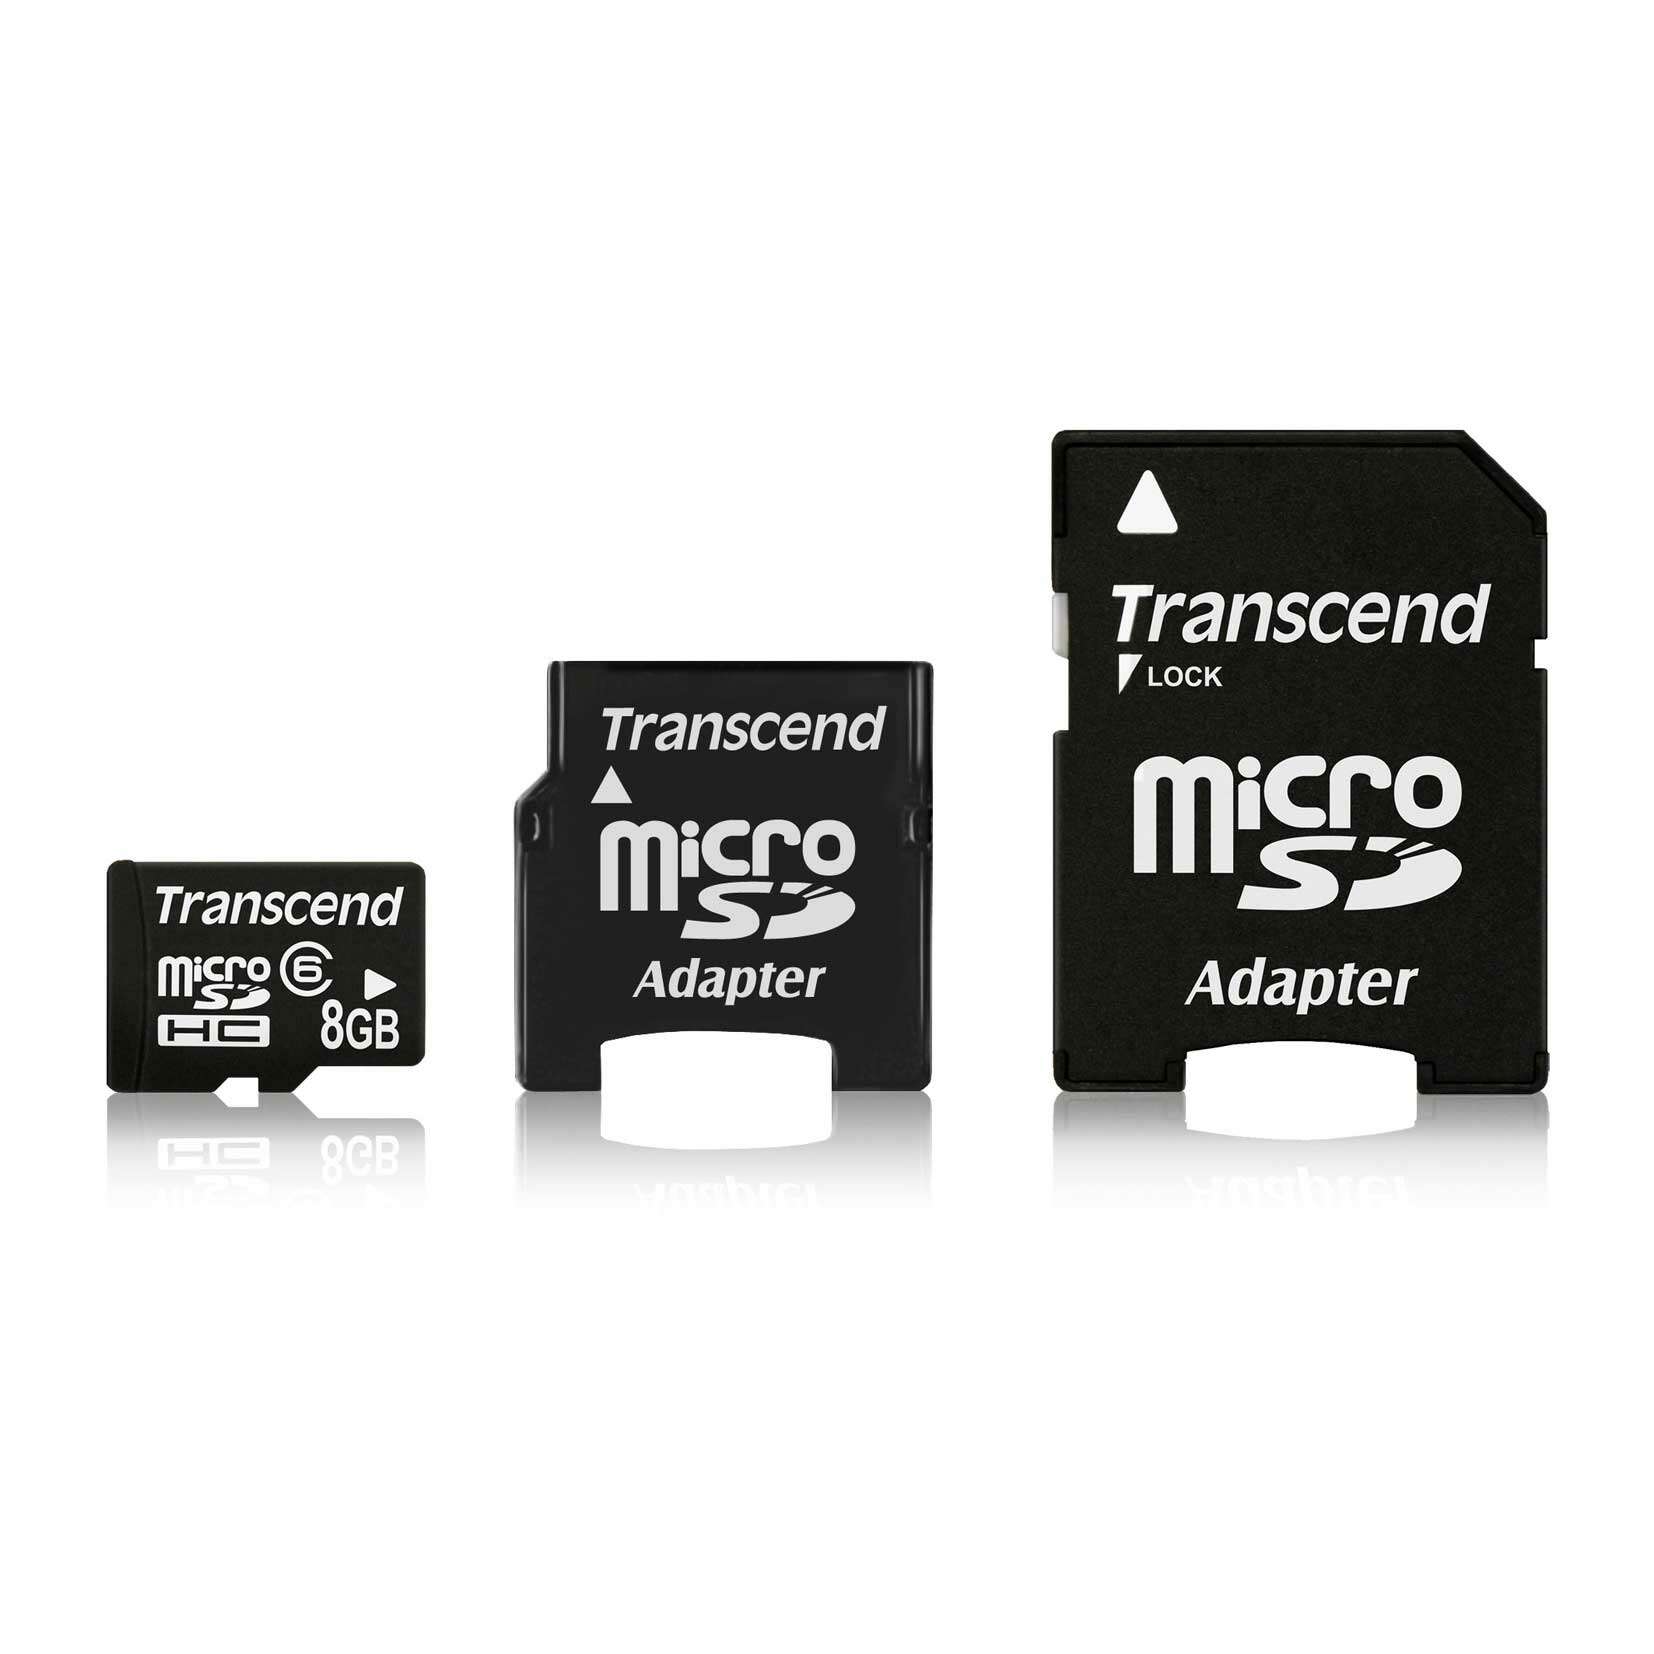 Адаптер microsdhc. MICROSD (SDHC) 8 ГБ. Карта памяти Transcend 8 GB class 4. Transcend 8gb карта памяти MICROSD HC. Карта памяти Transcend 8 ГБ.